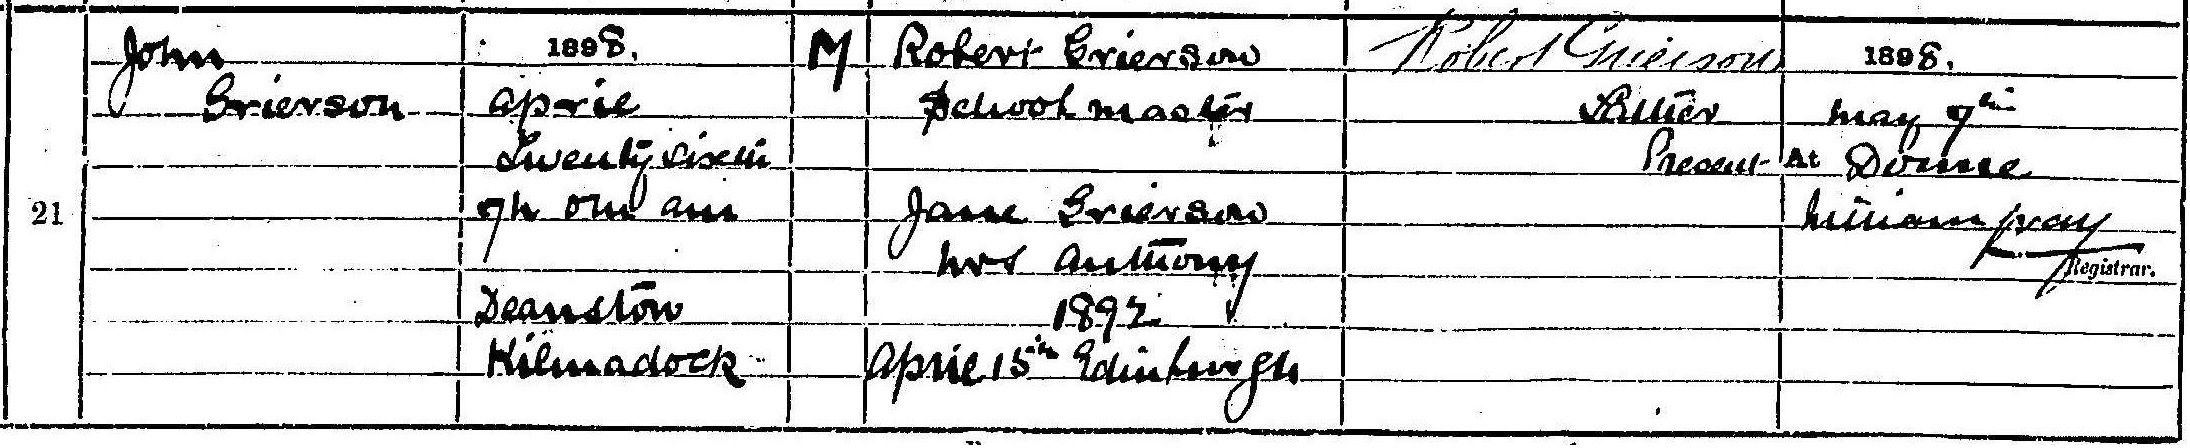 John Grierson's birth certificate, 1898